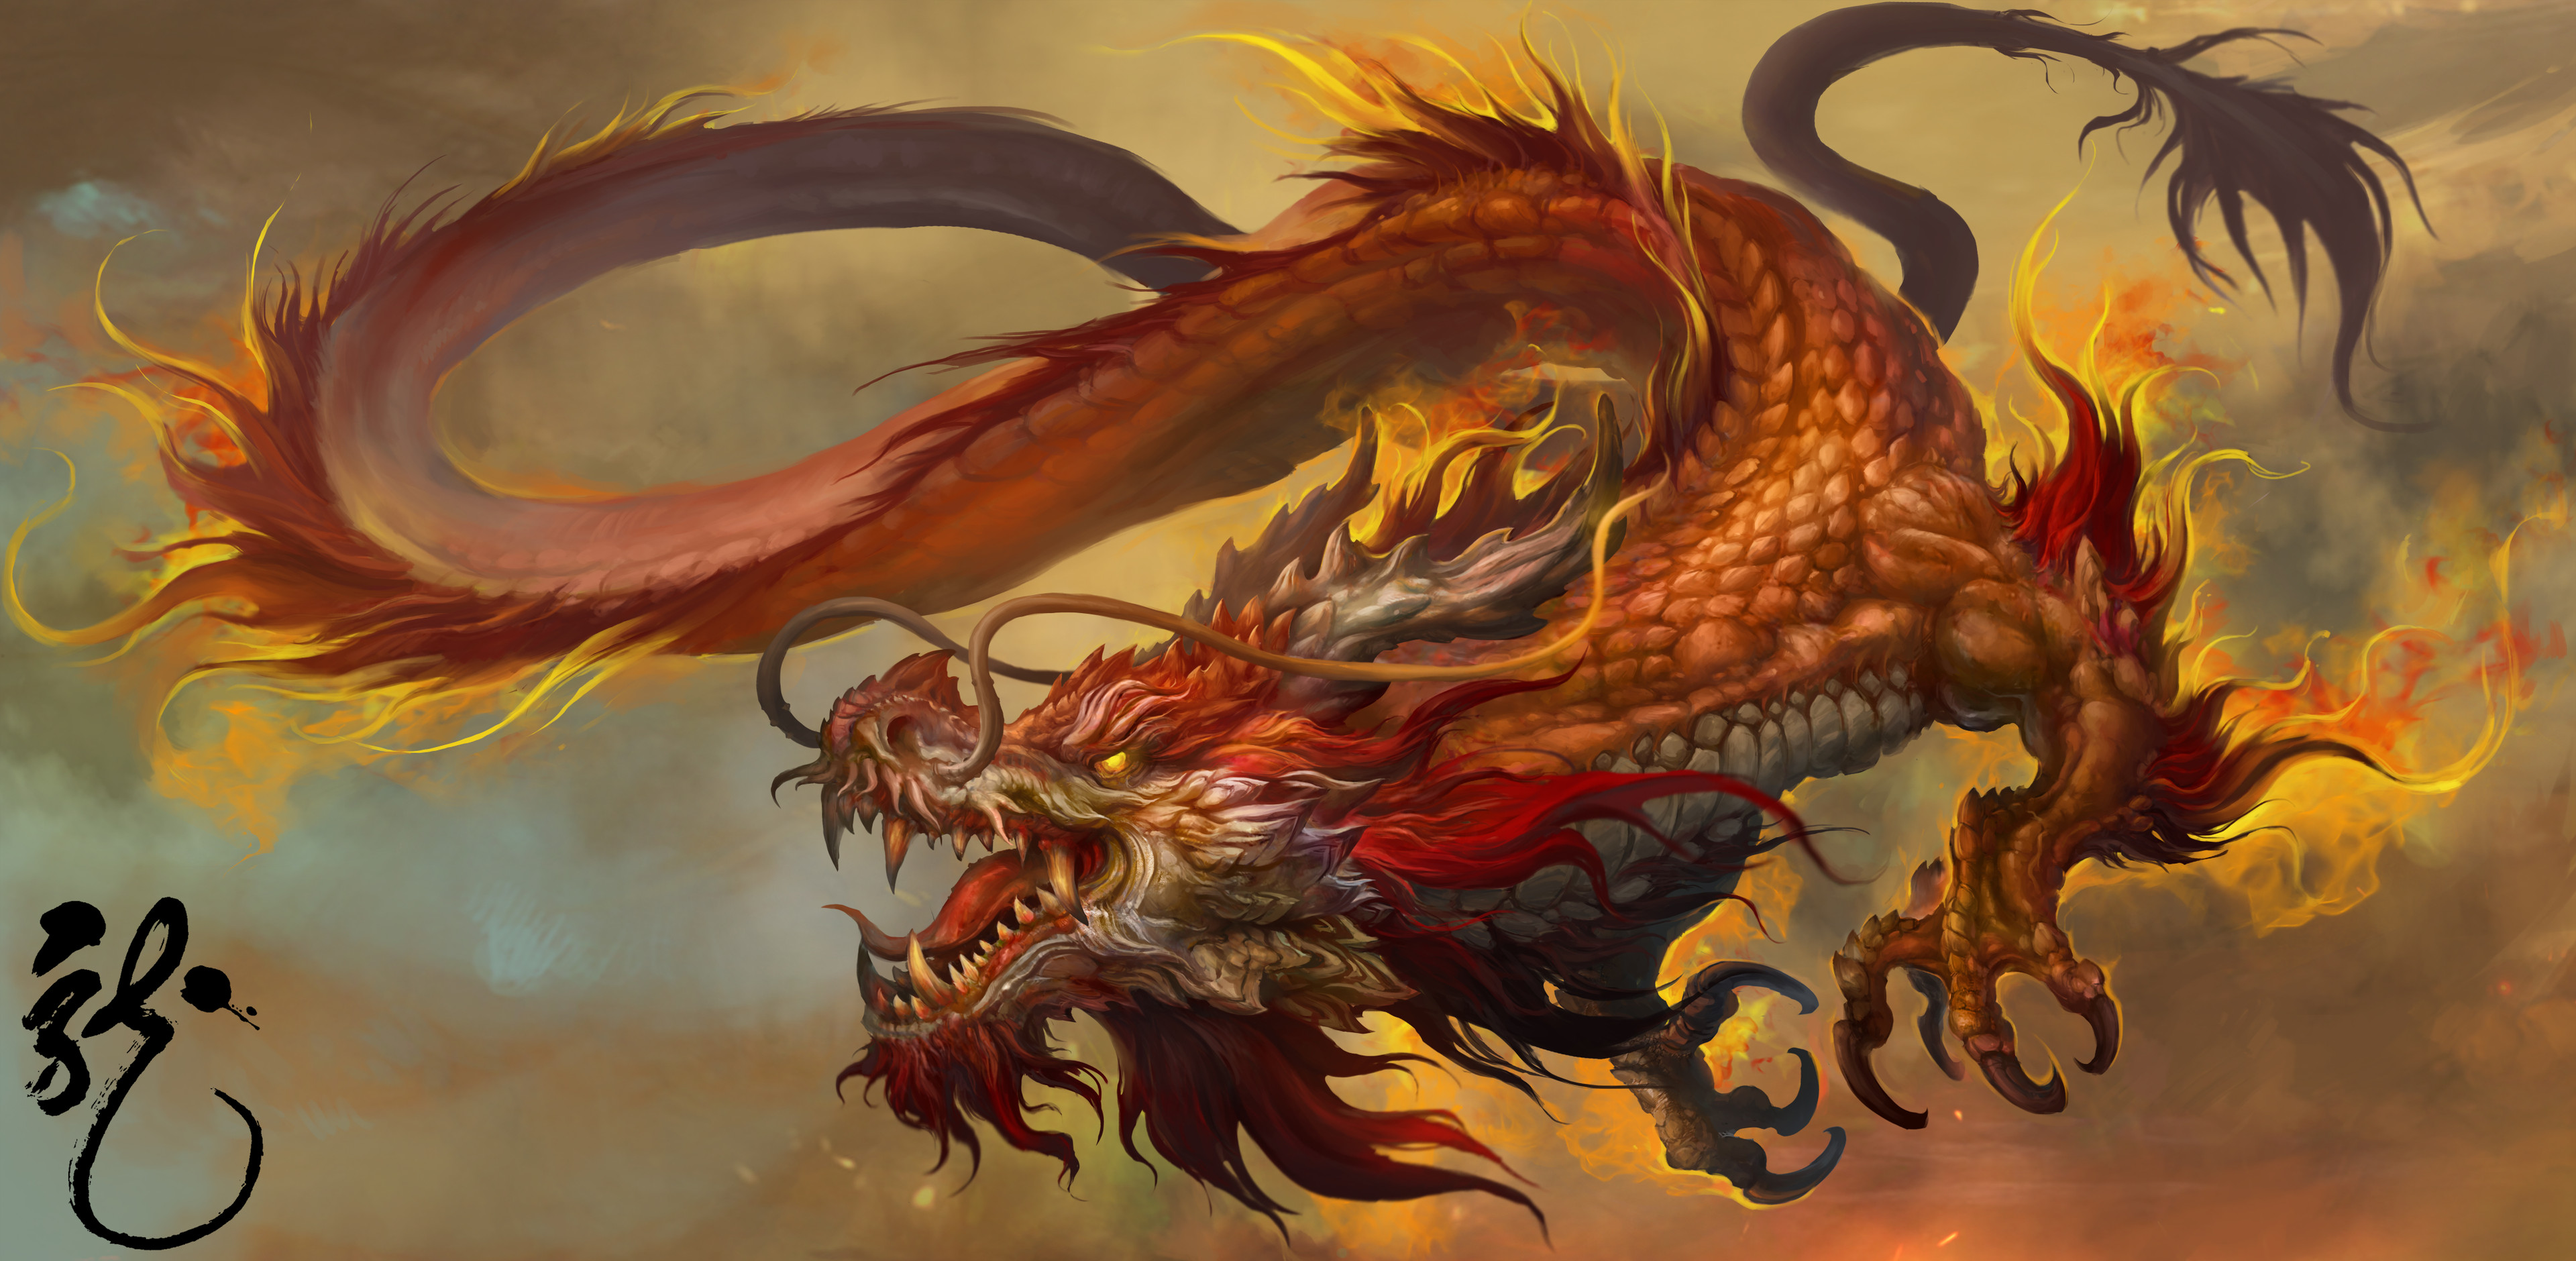 Dragon Showcase  Fire Force Online 